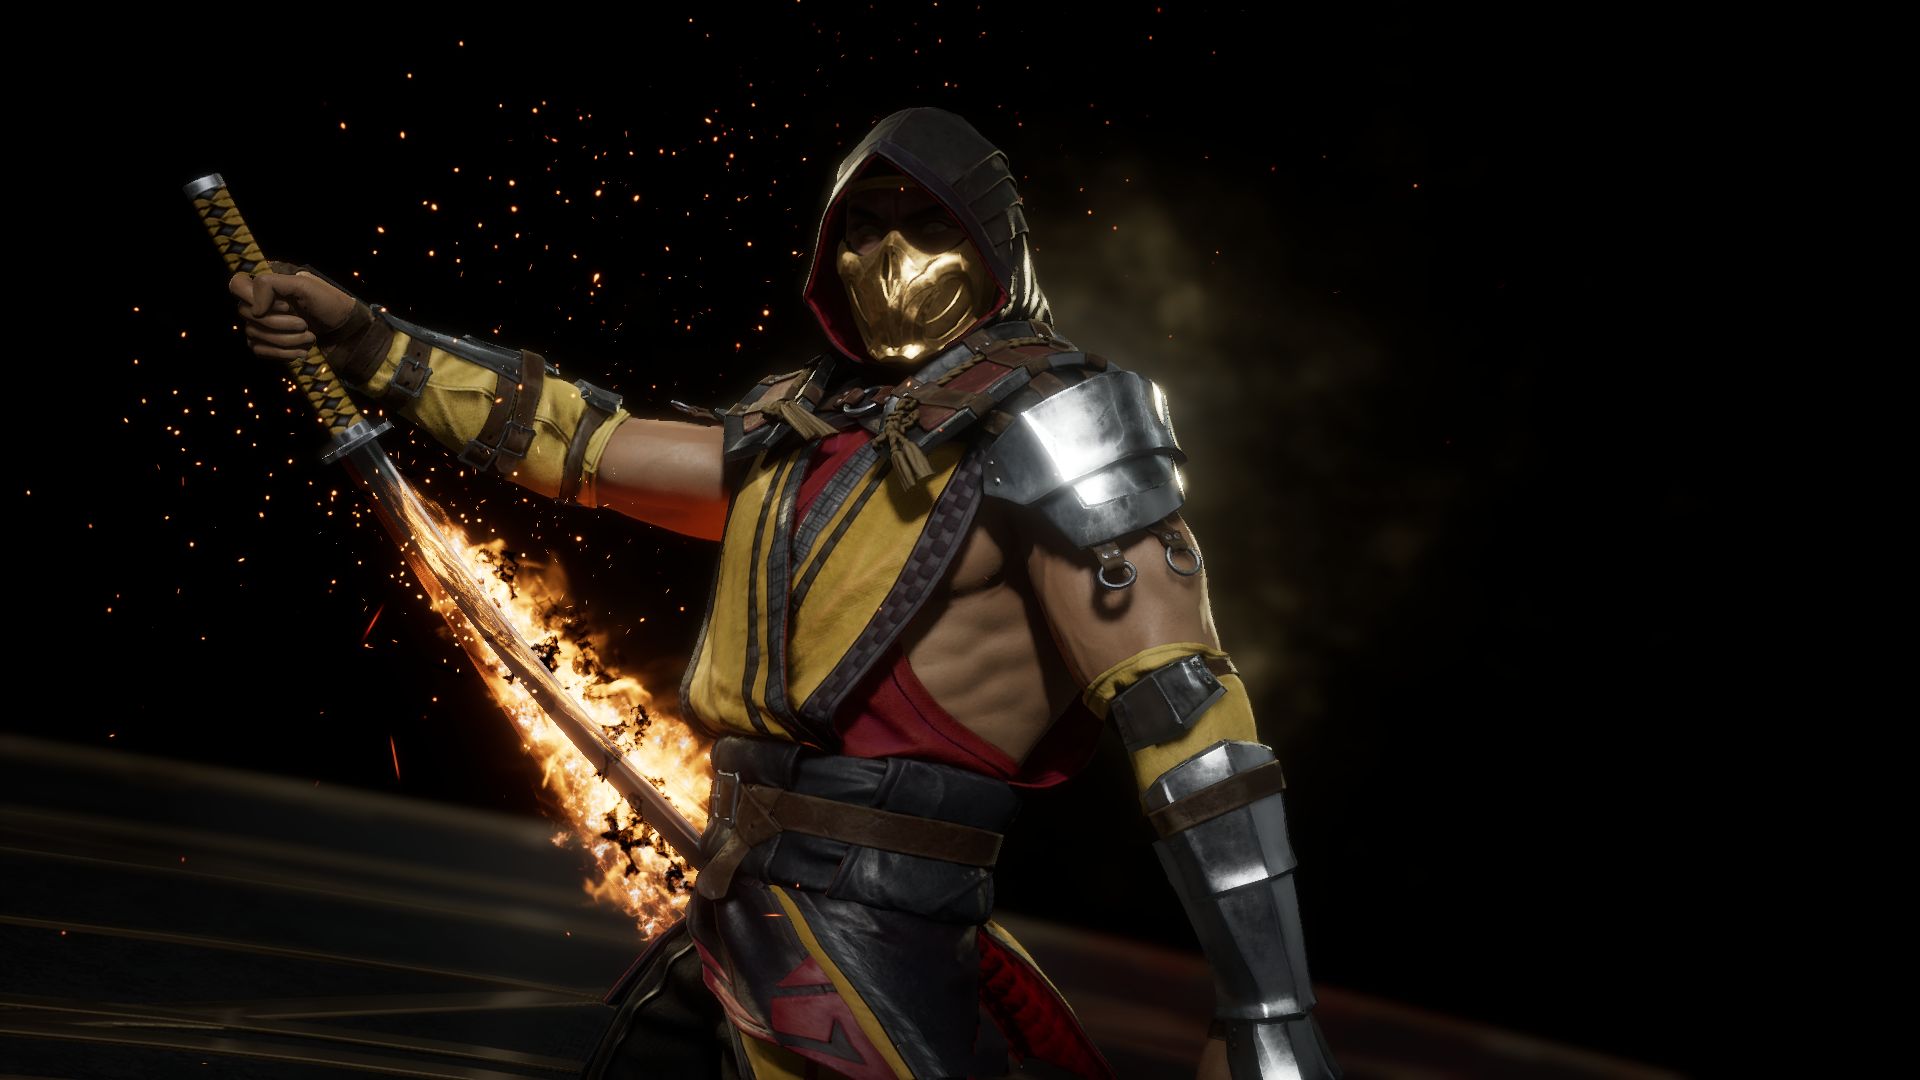  Scorpion (Mortal Kombat) HQ Background Wallpapers